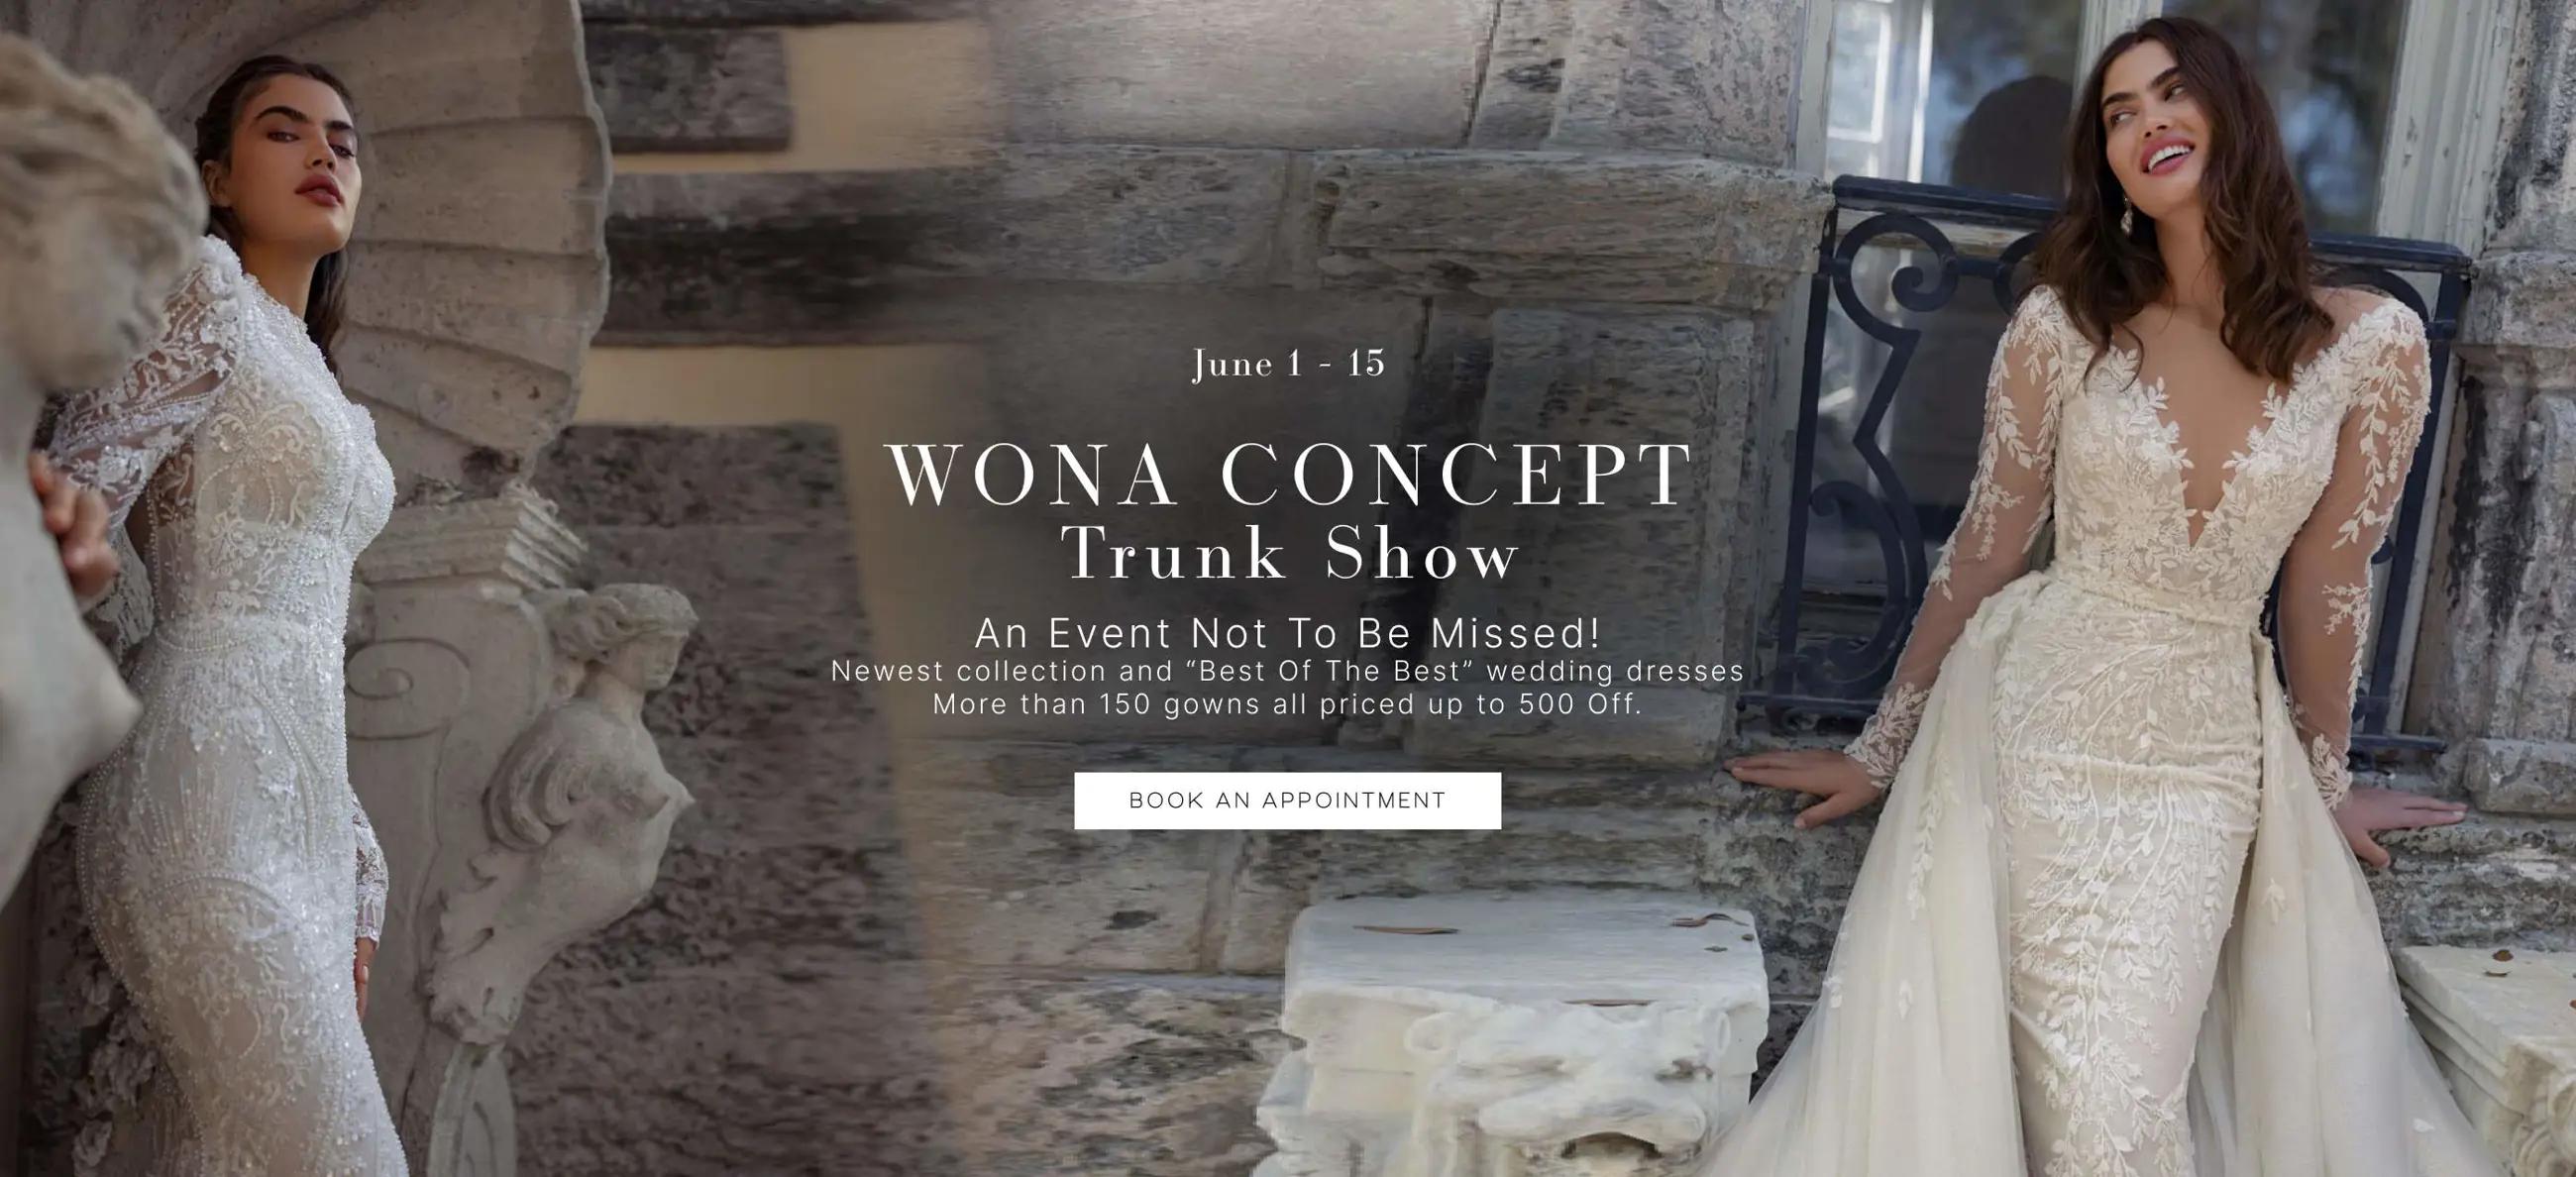 Wona Concept Trunk Show banner